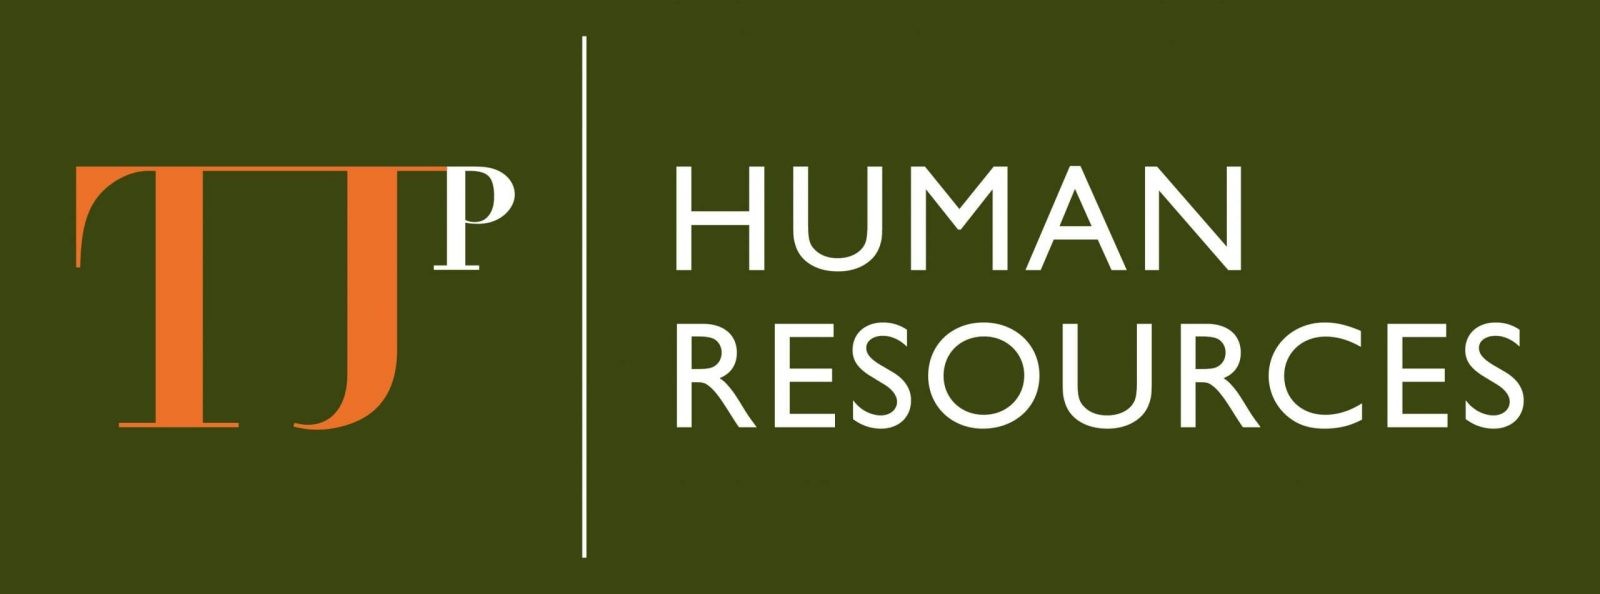 TJP Human Resources Logo